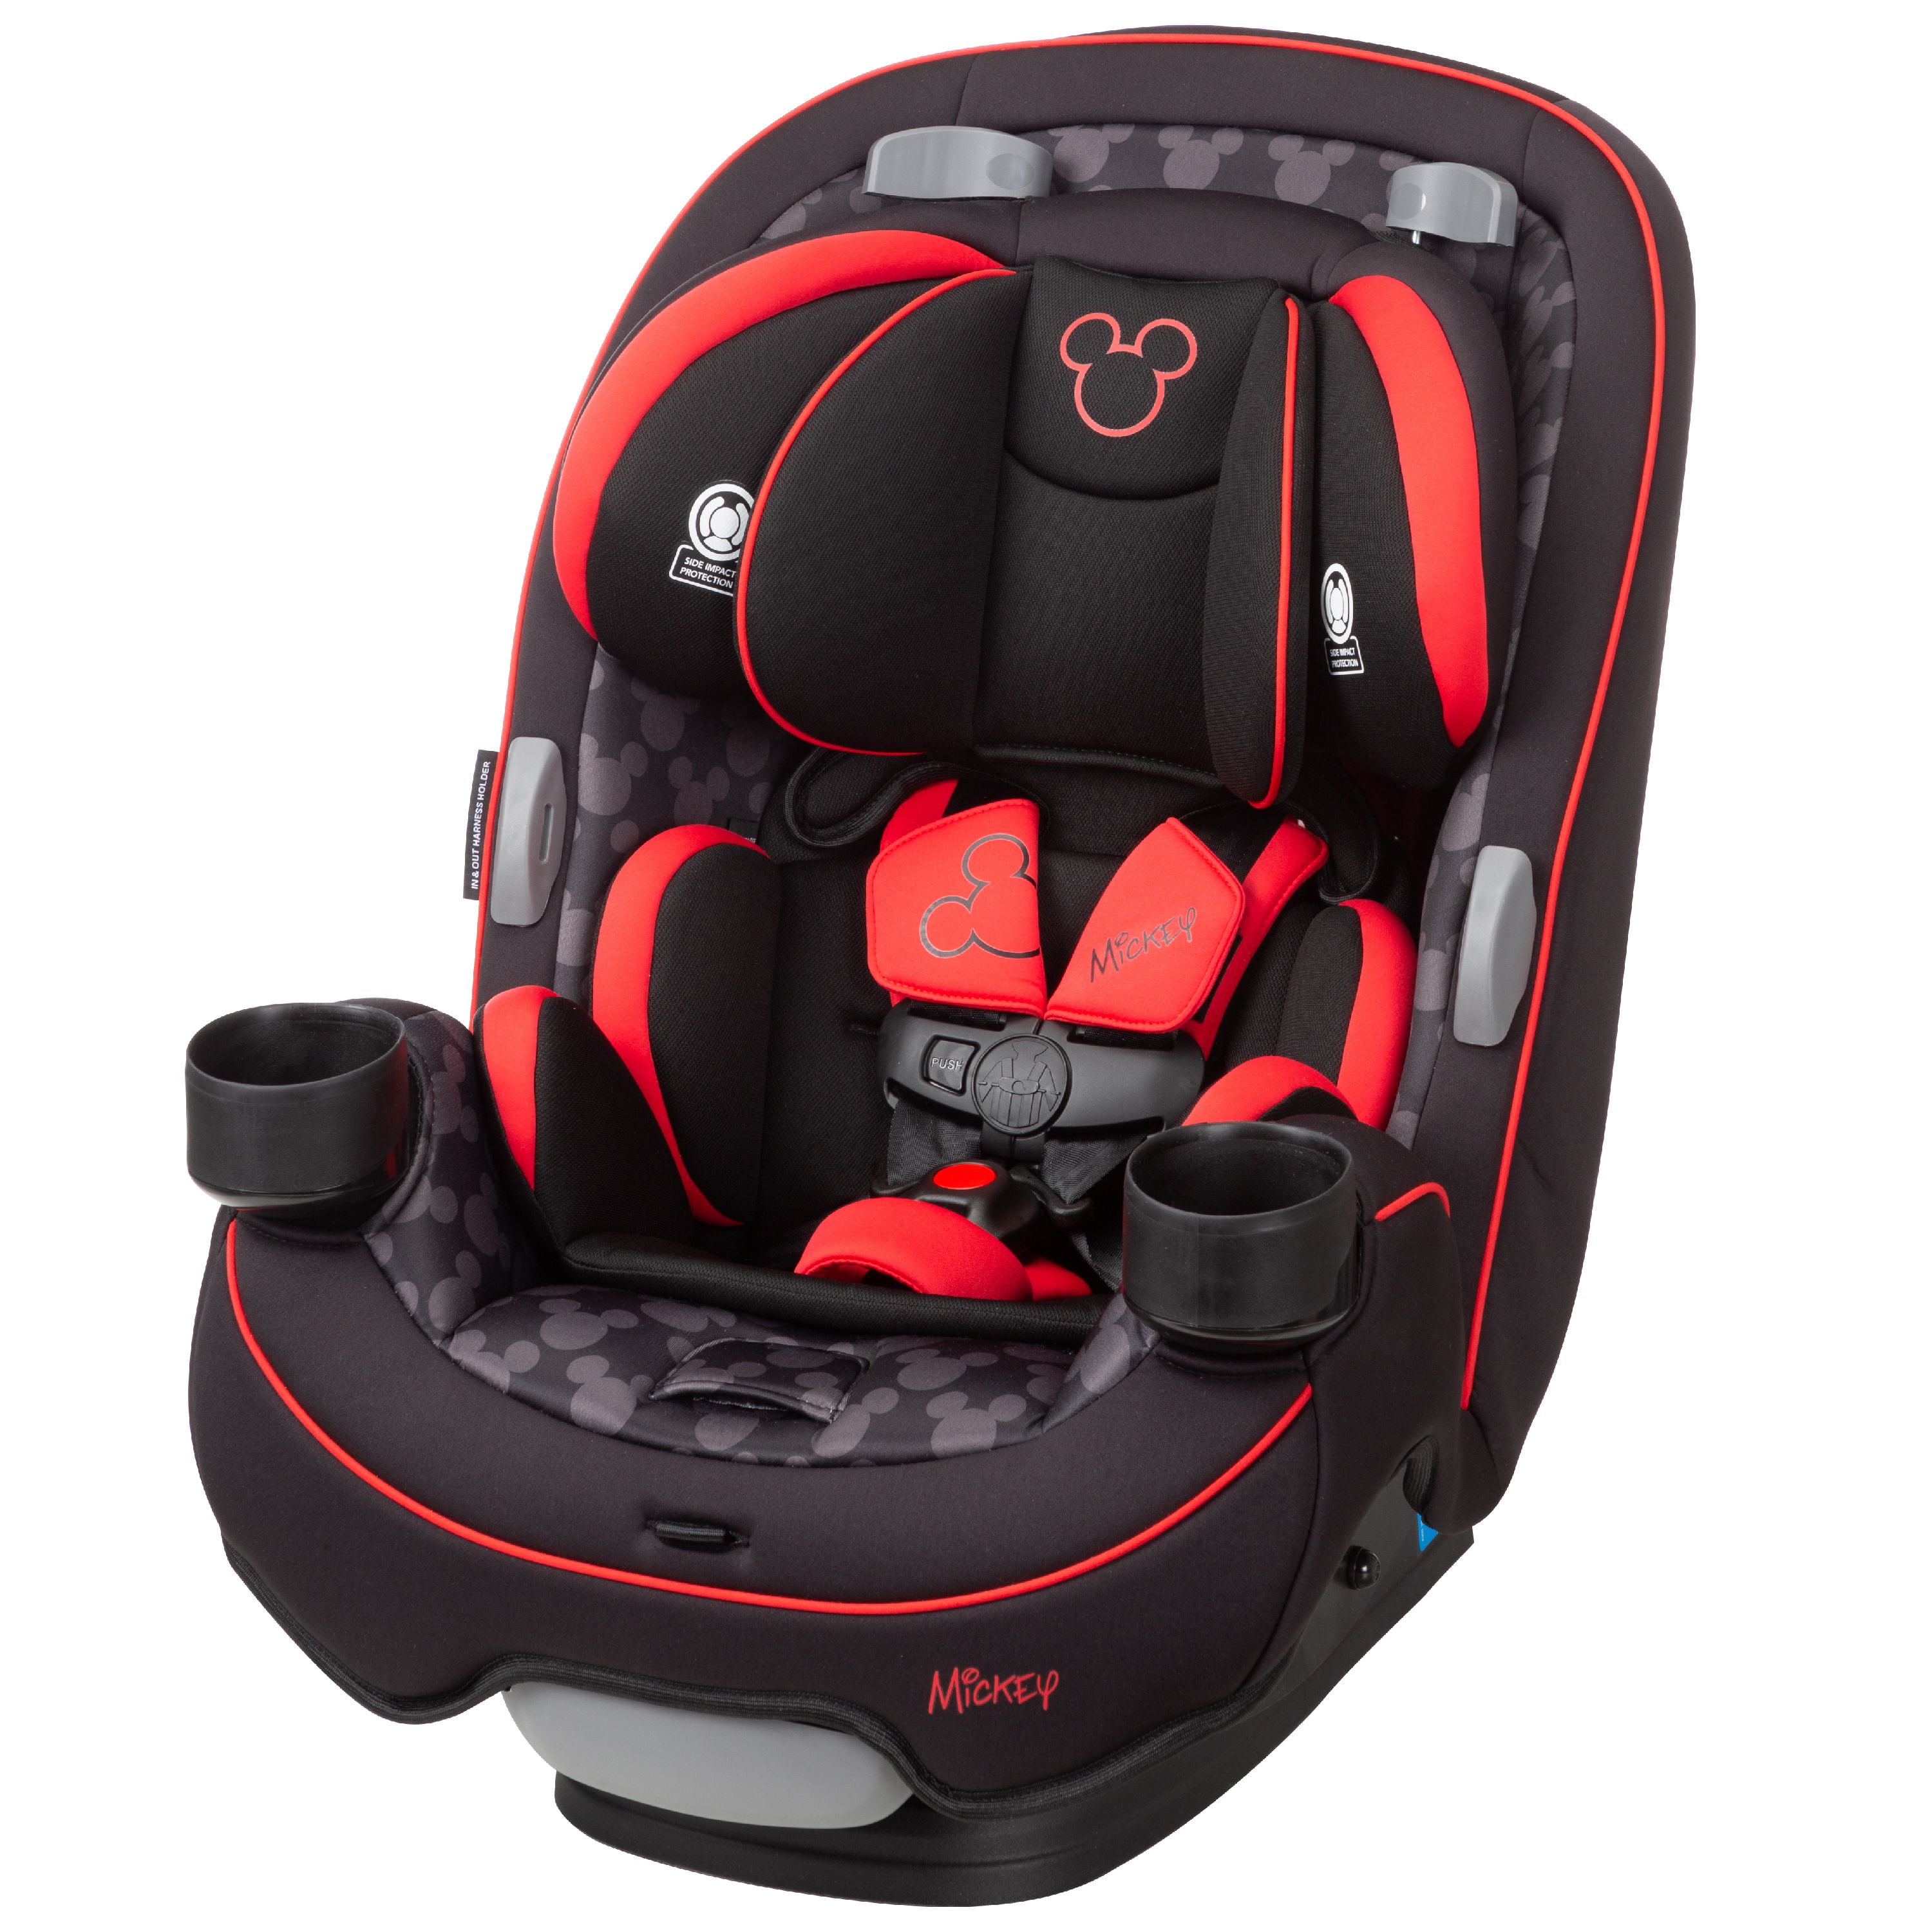 Baby seater price